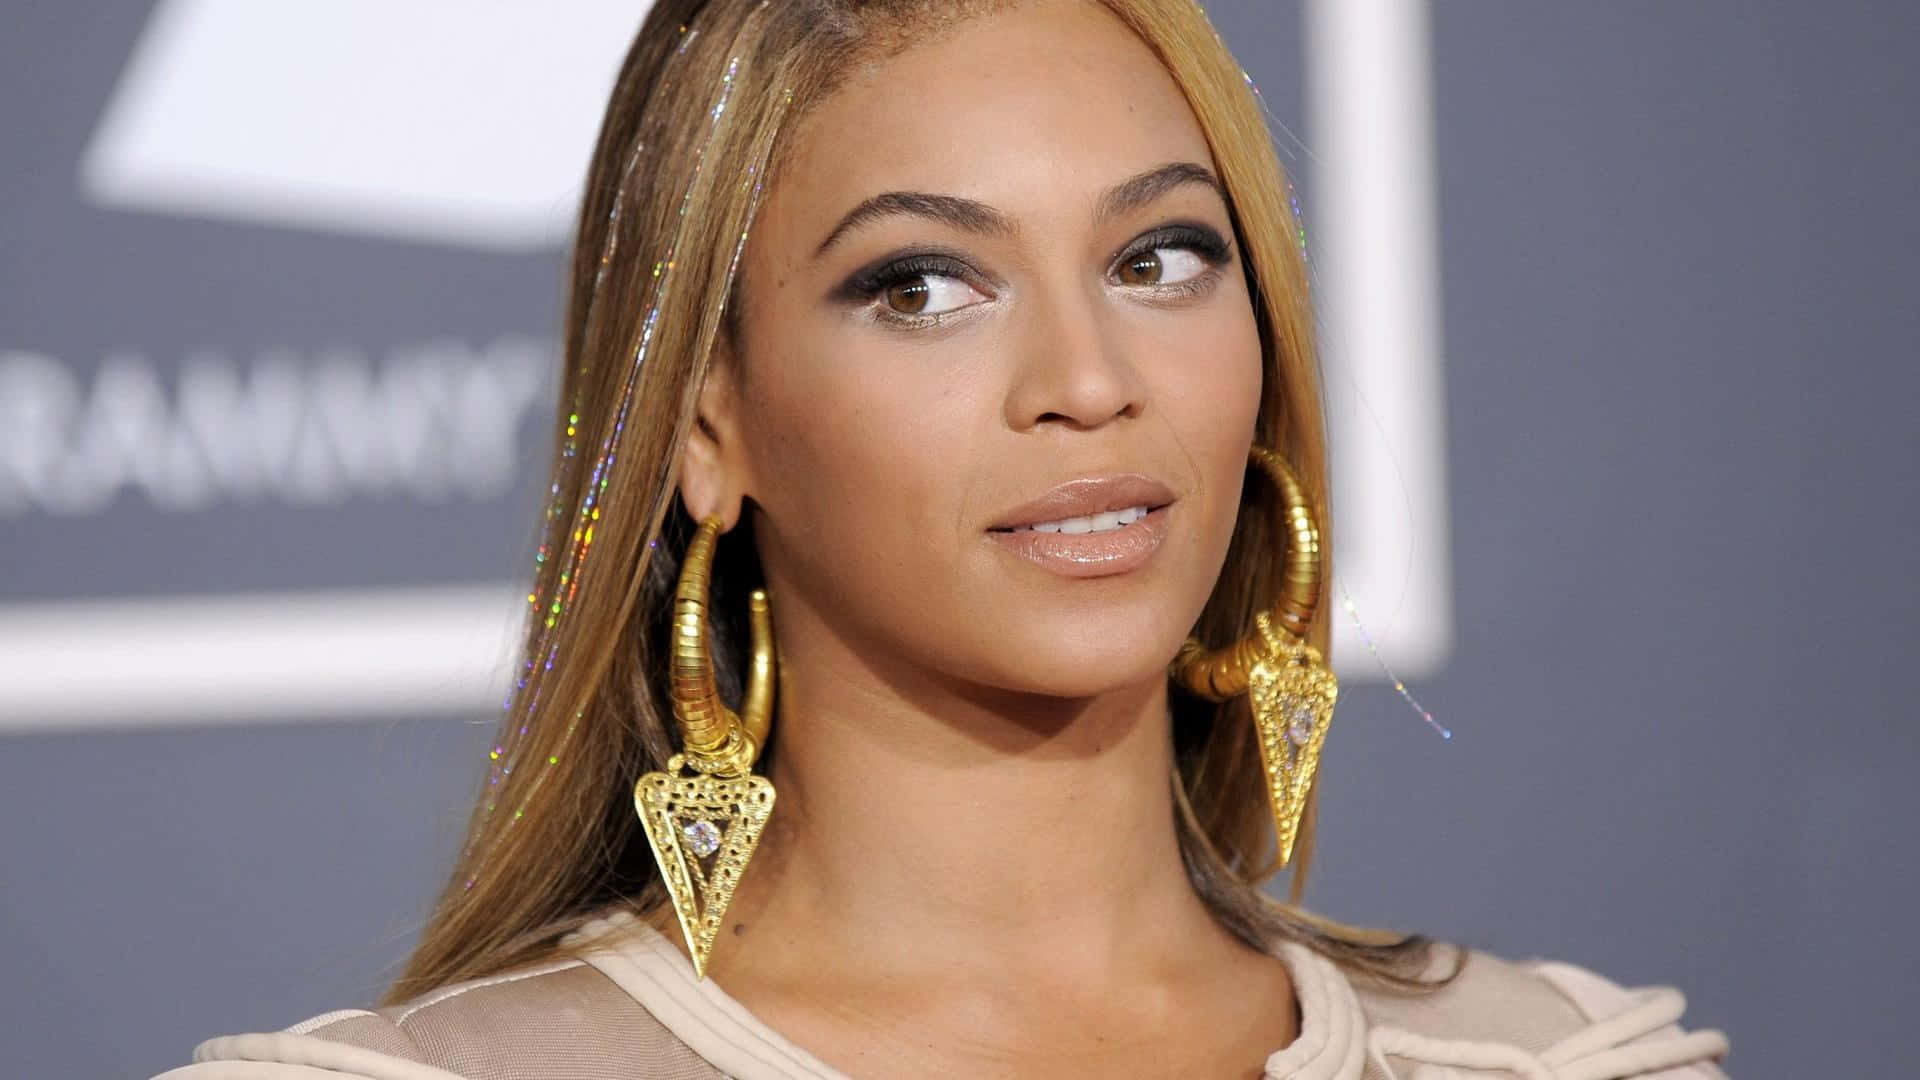 Queen of music, Beyonce